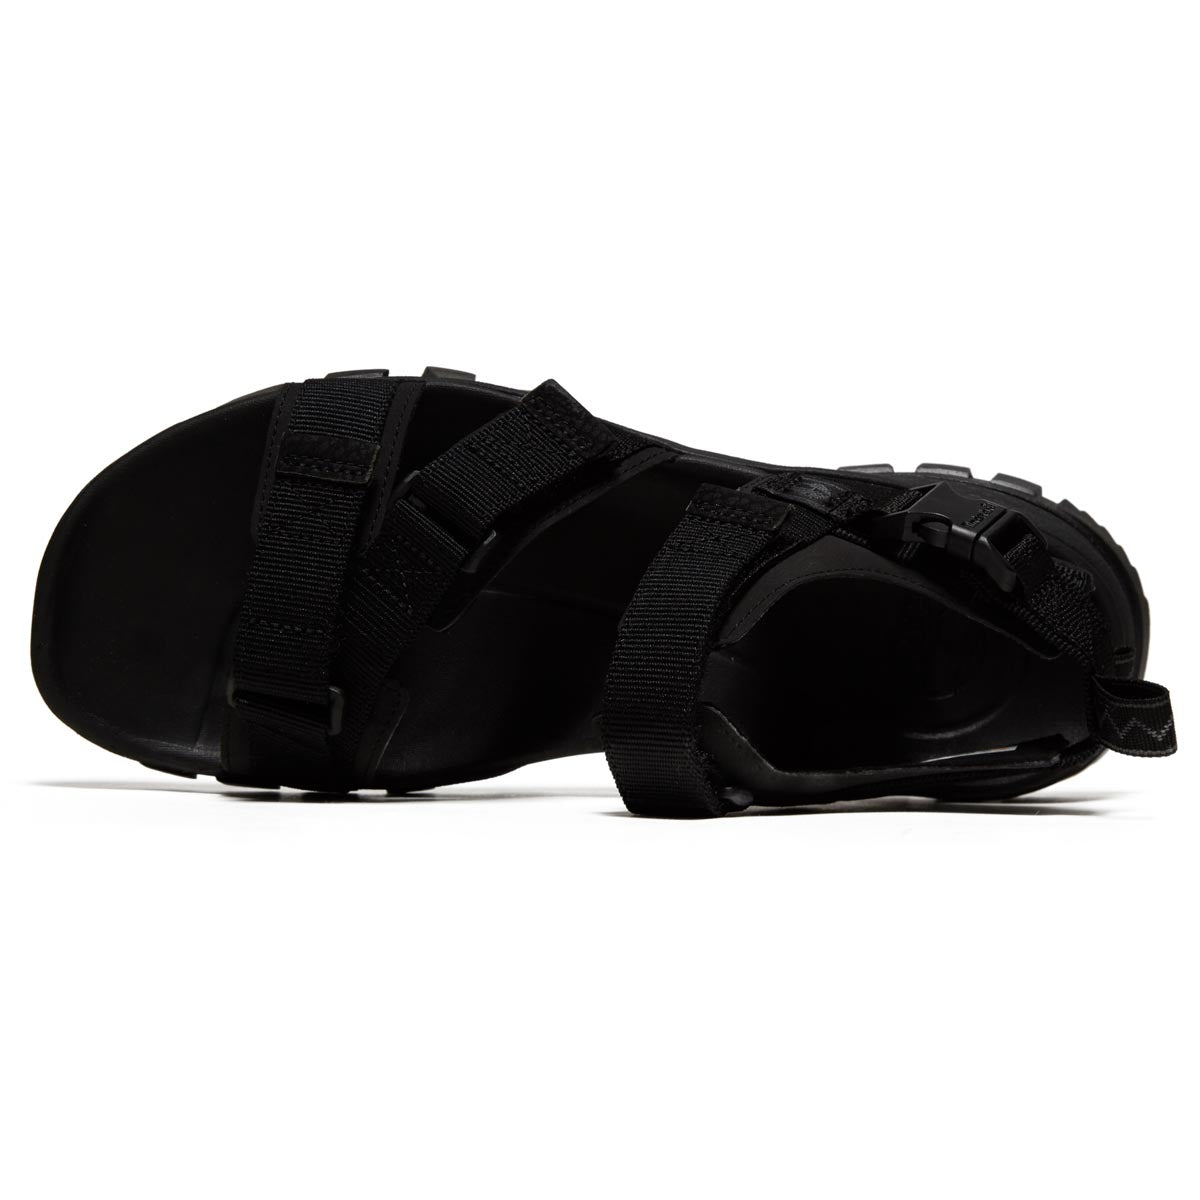 Timberland Garrison Trail 2 Strap Sandals Shoes - Jet Black image 3